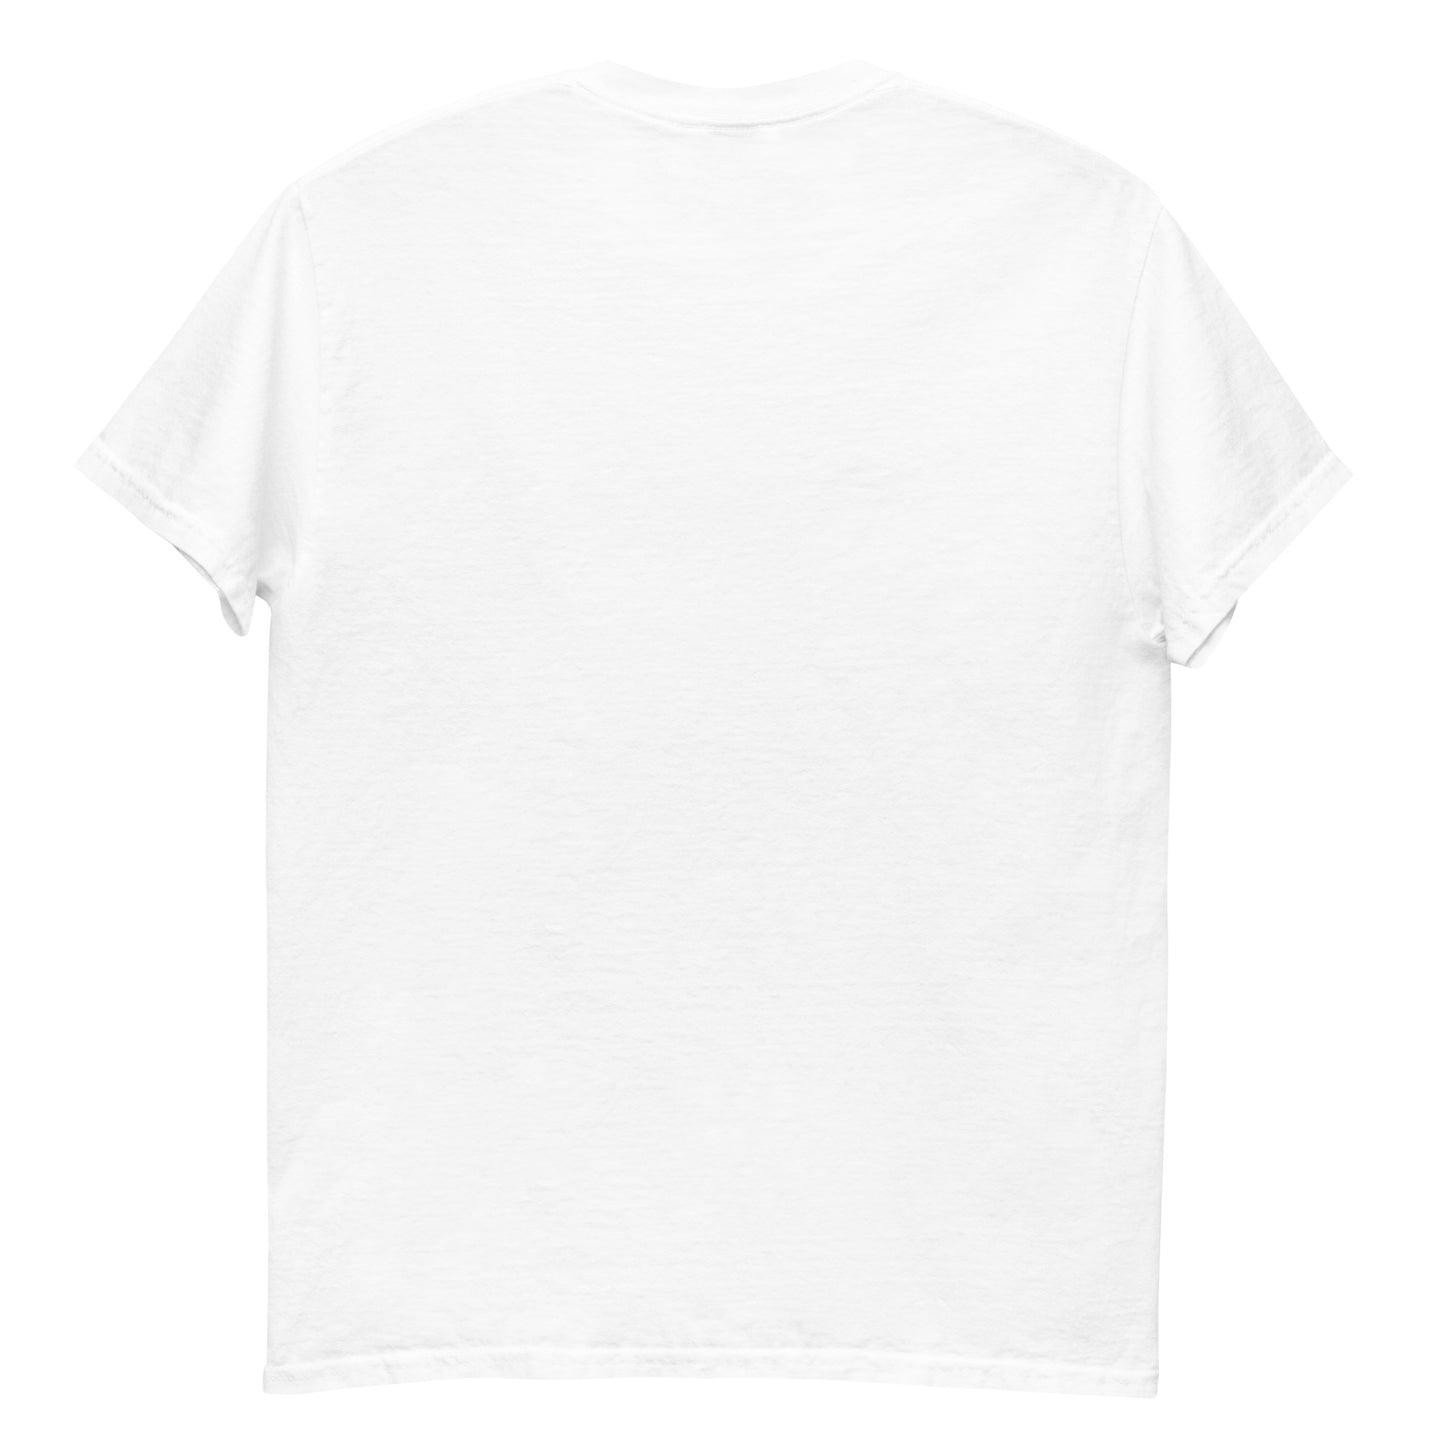 ImportWorx Embroidered Cruise White Tee Shirt XXL